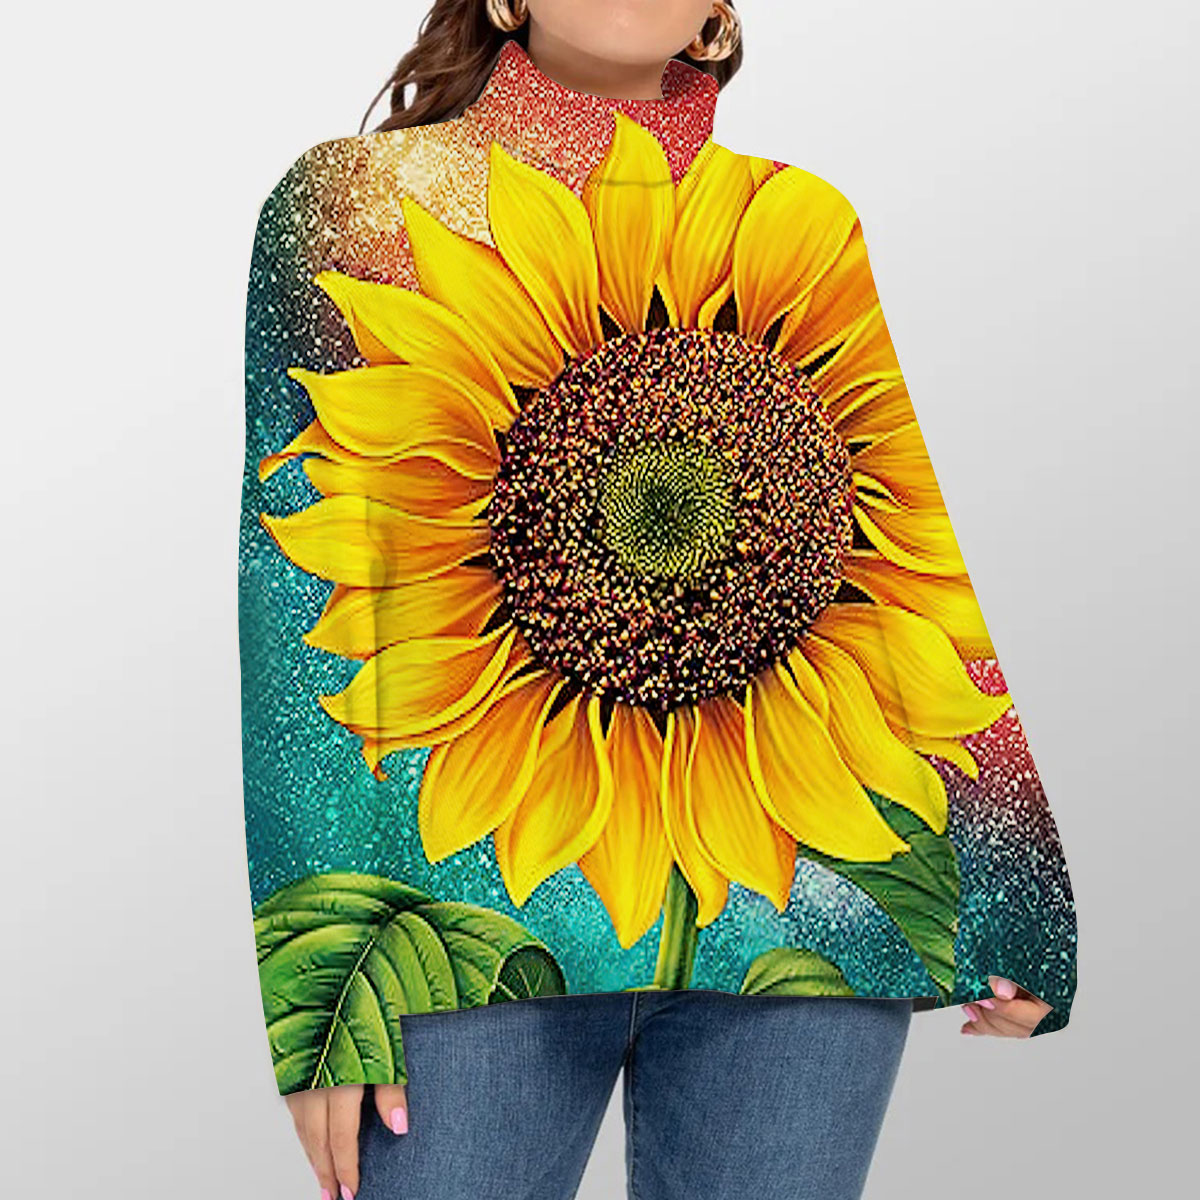 Trippy Galaxy Sunflower Turtleneck Sweater